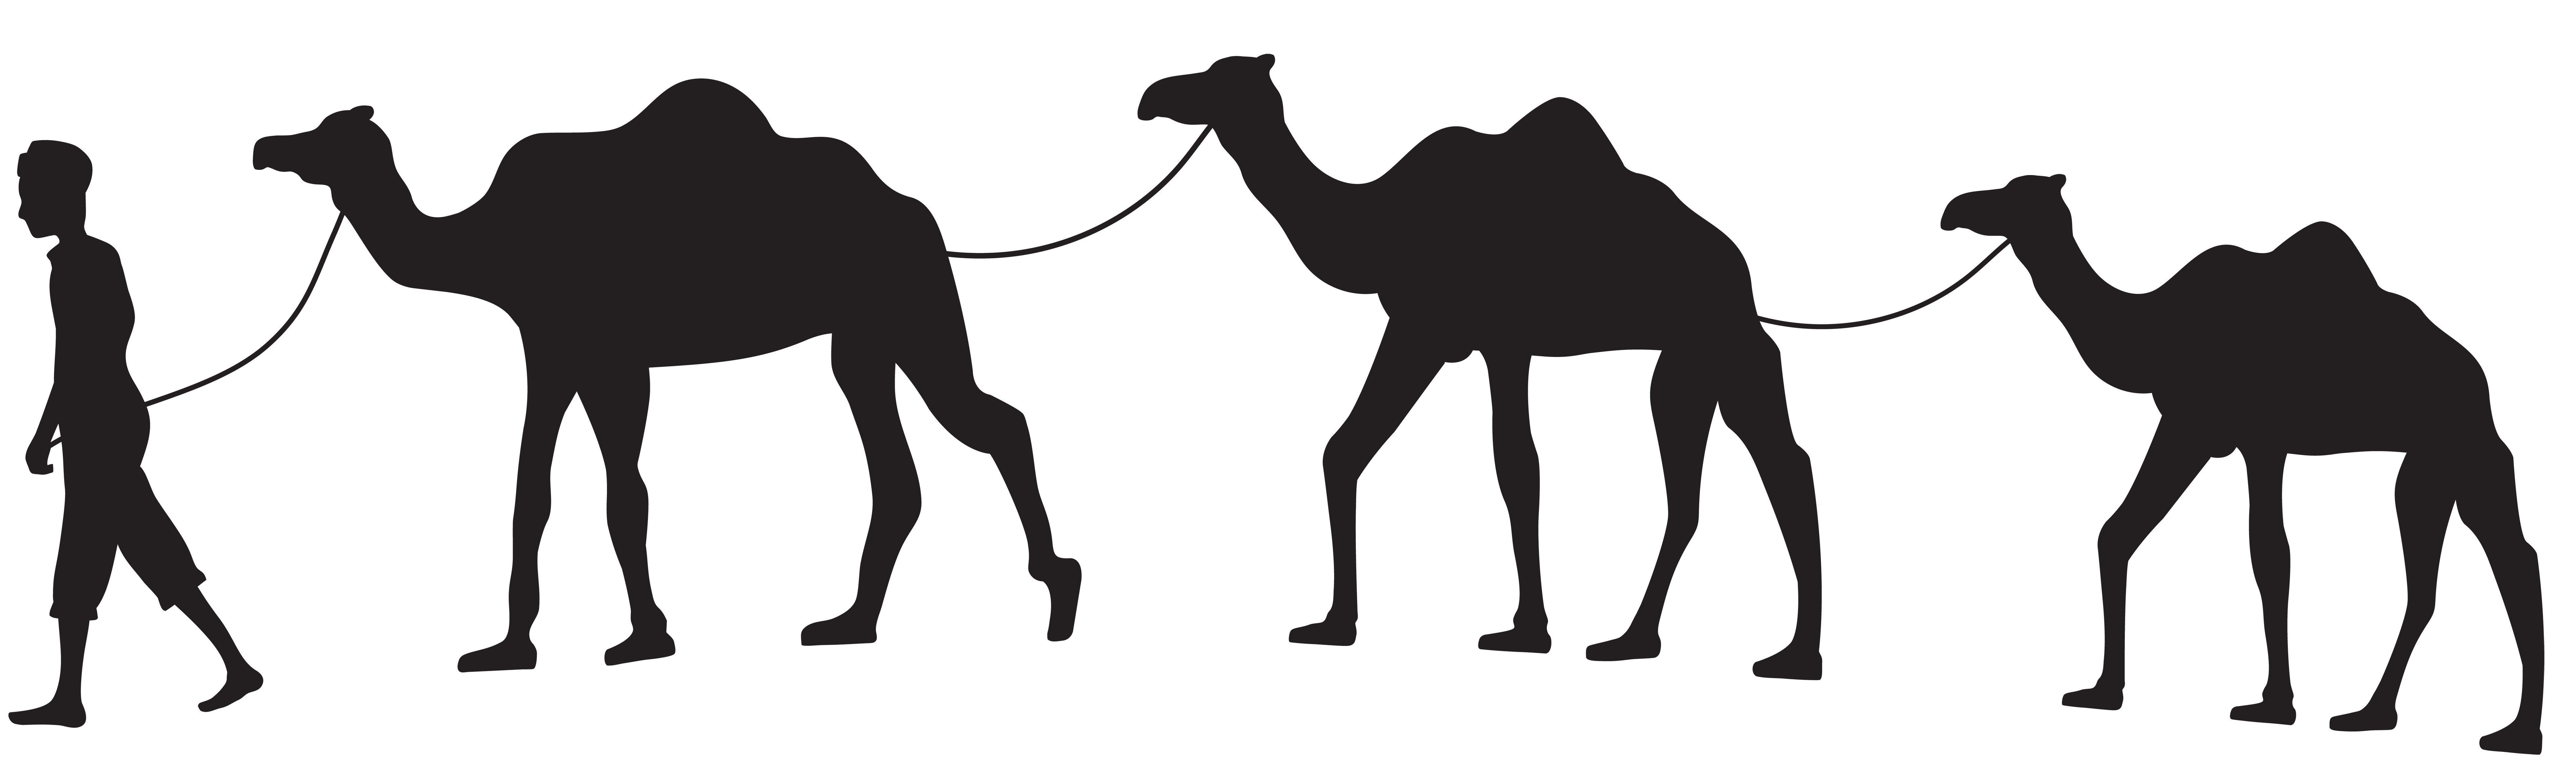 Camel caravan silhouette.